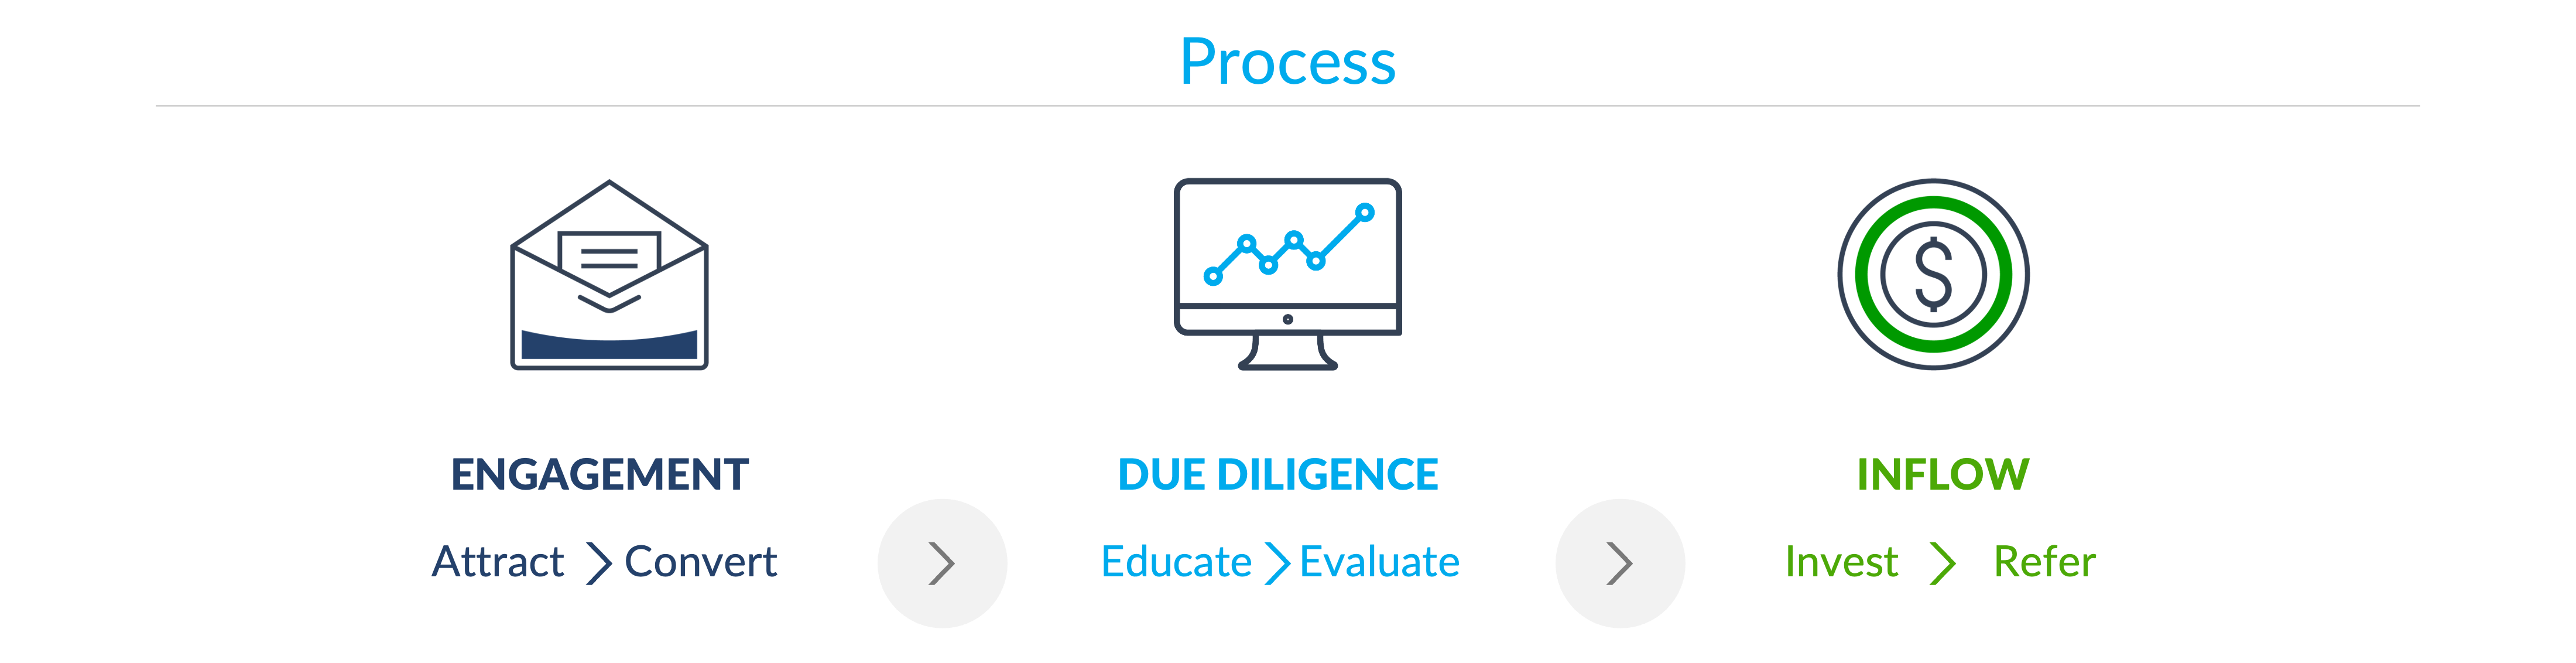 GK3 blog Process graphic